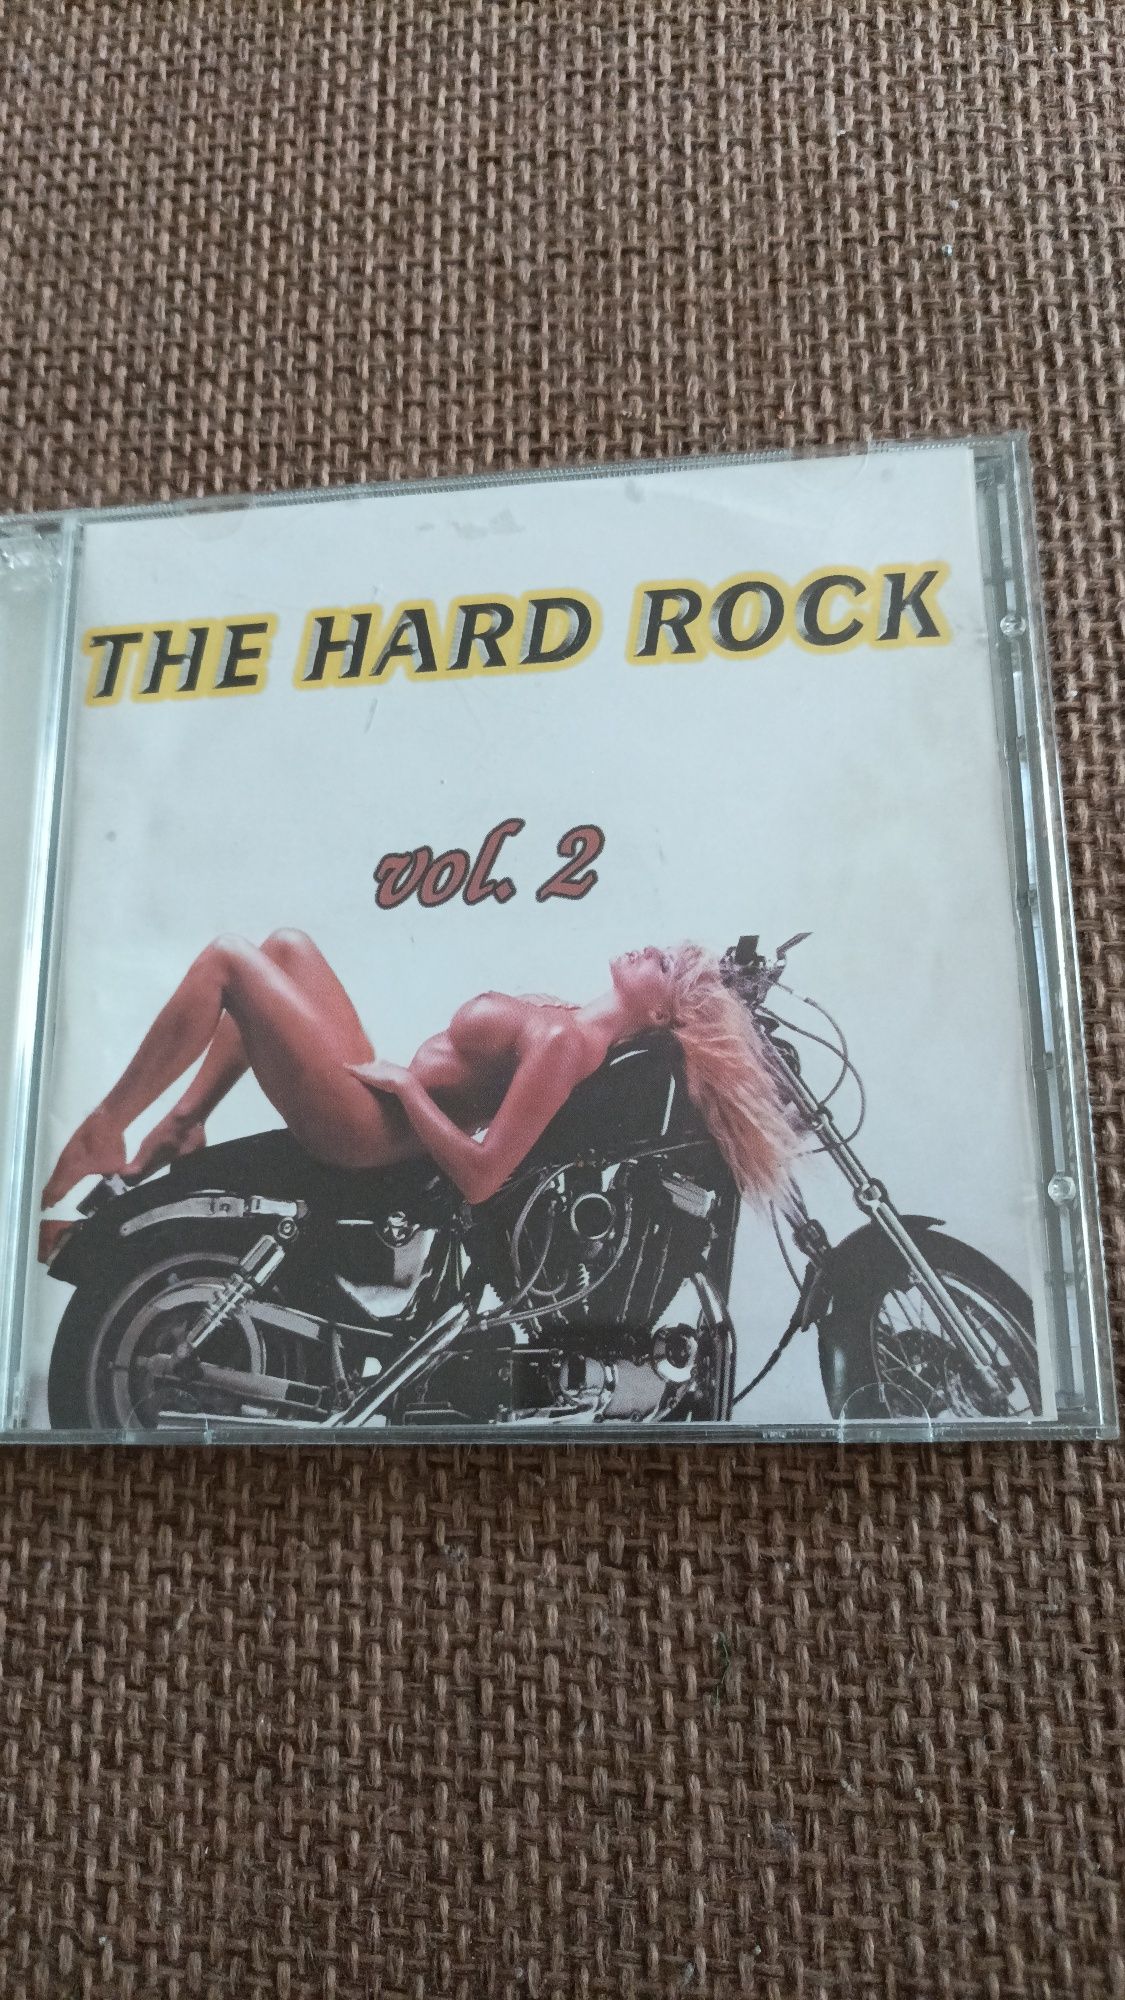 The hard rock, vol. 2